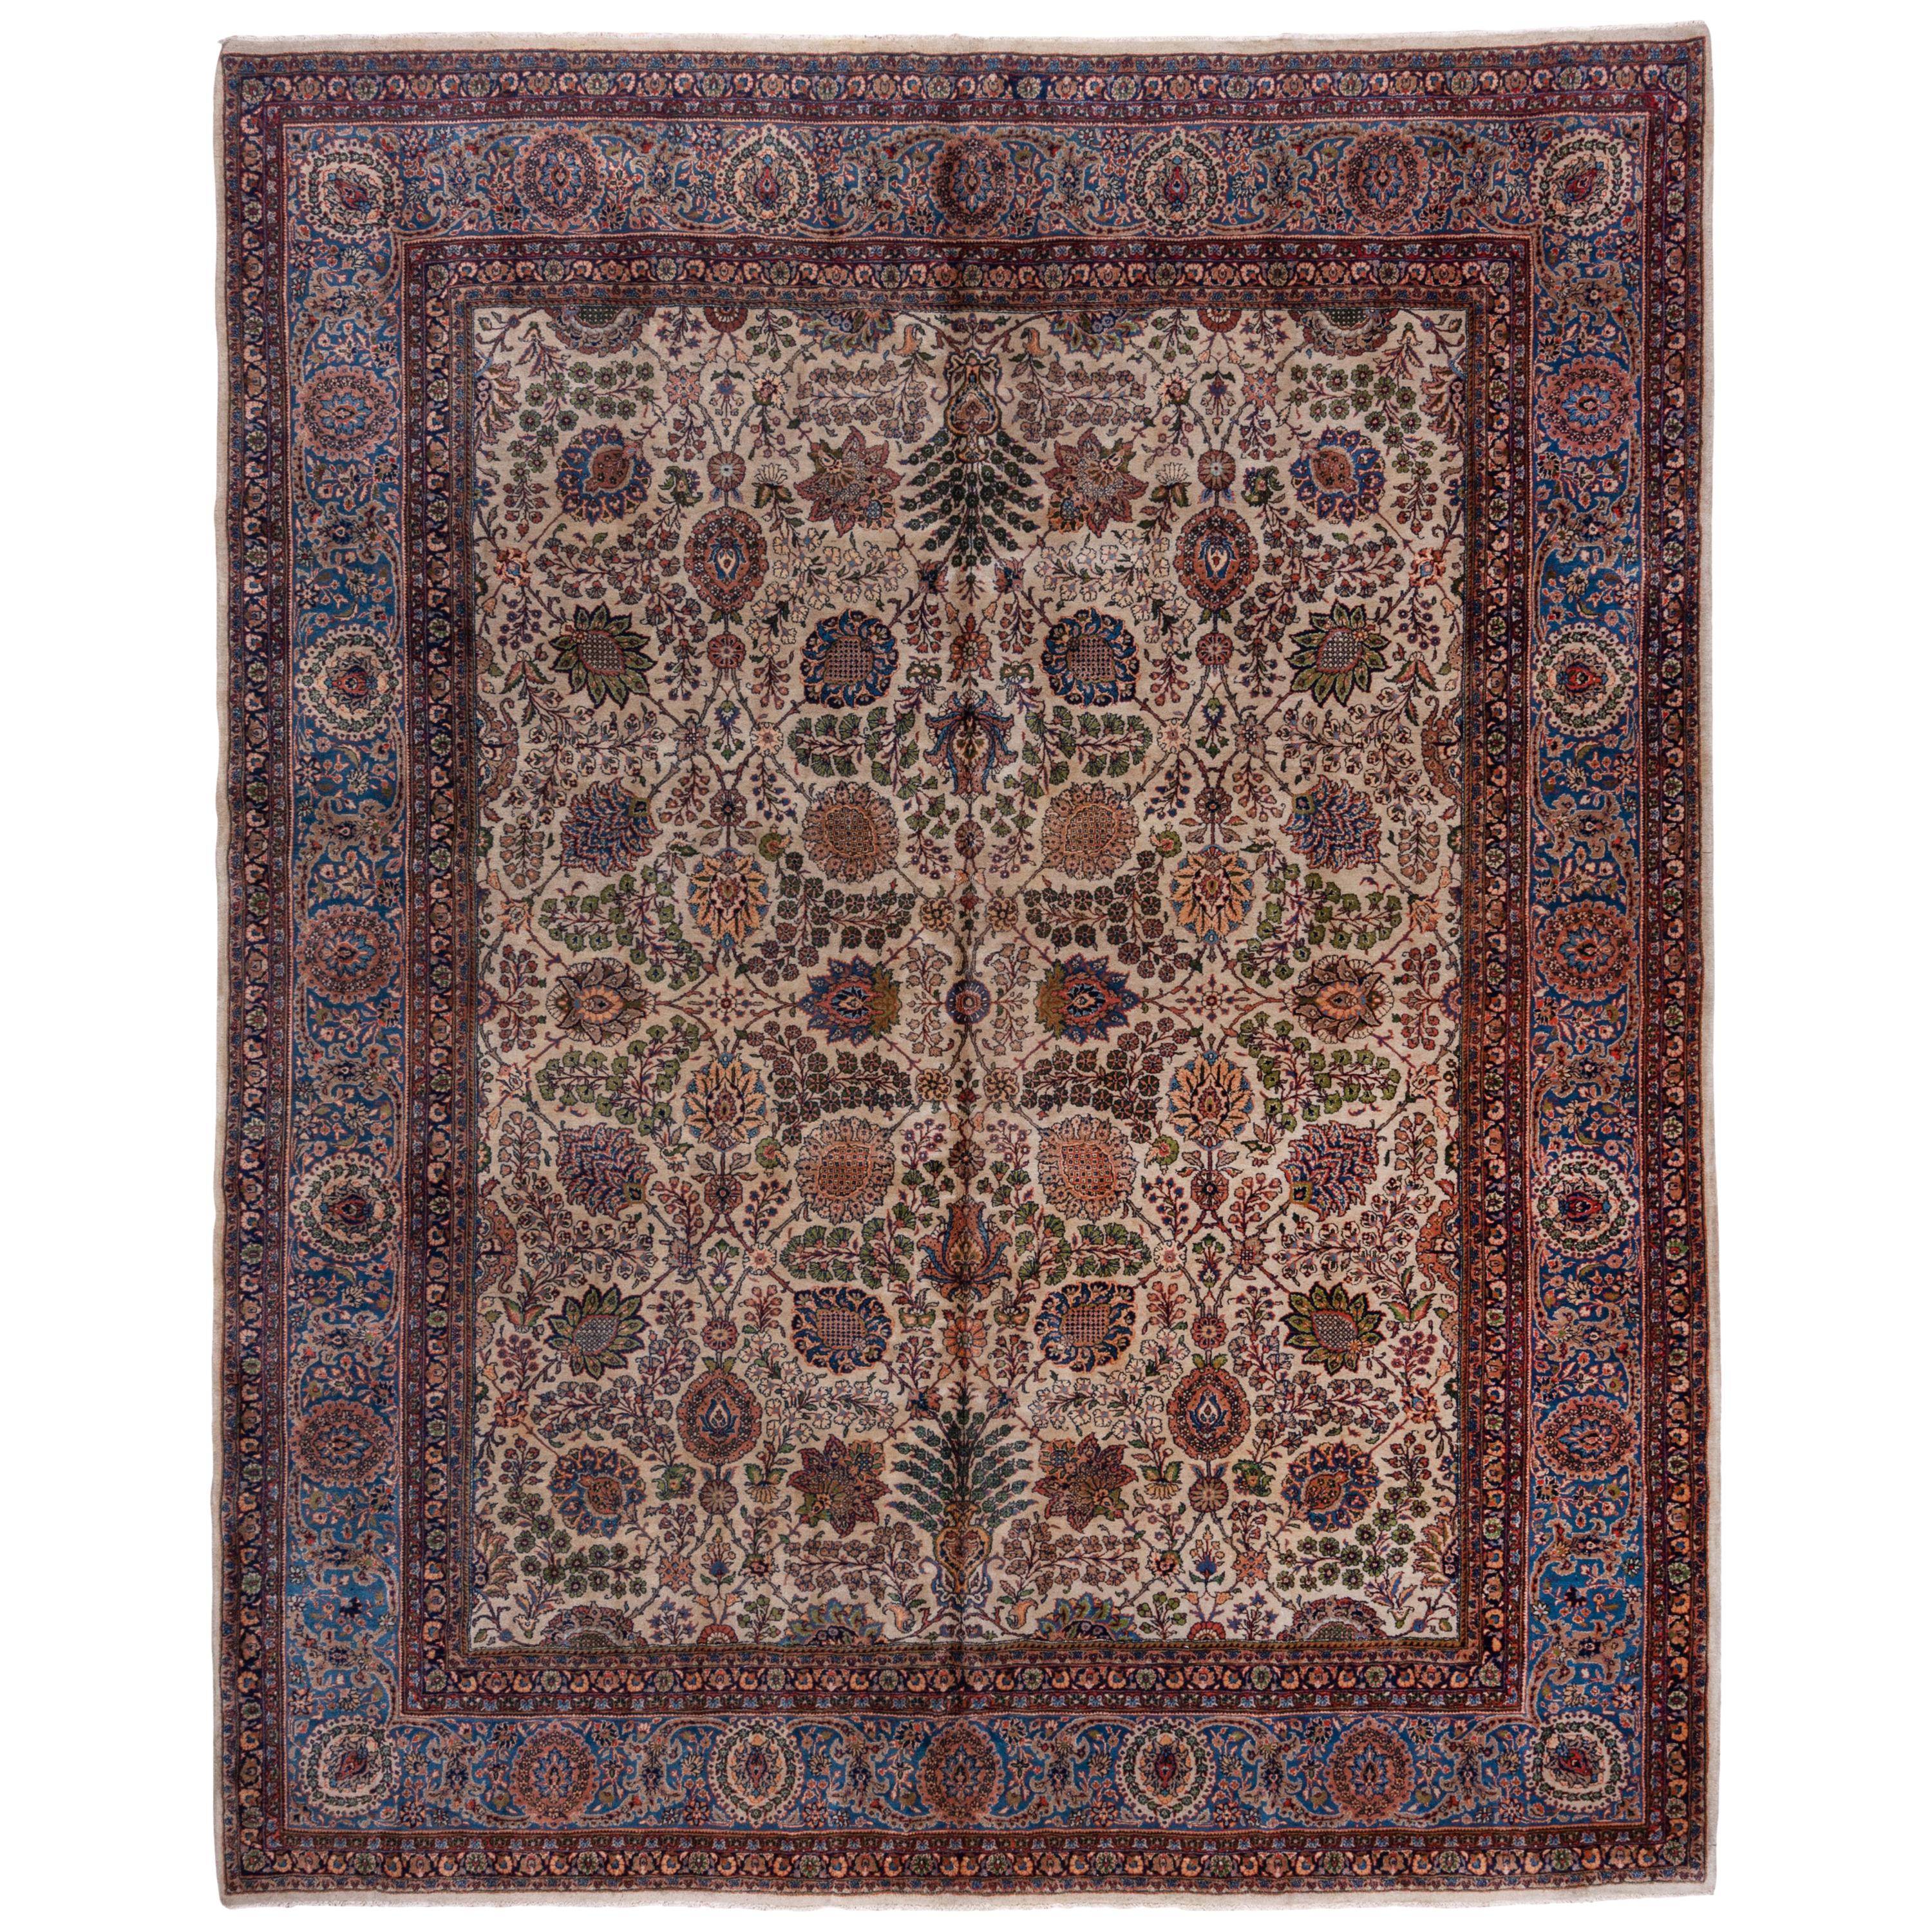 Antique Persian Kazvin Carpet, circa 1930s